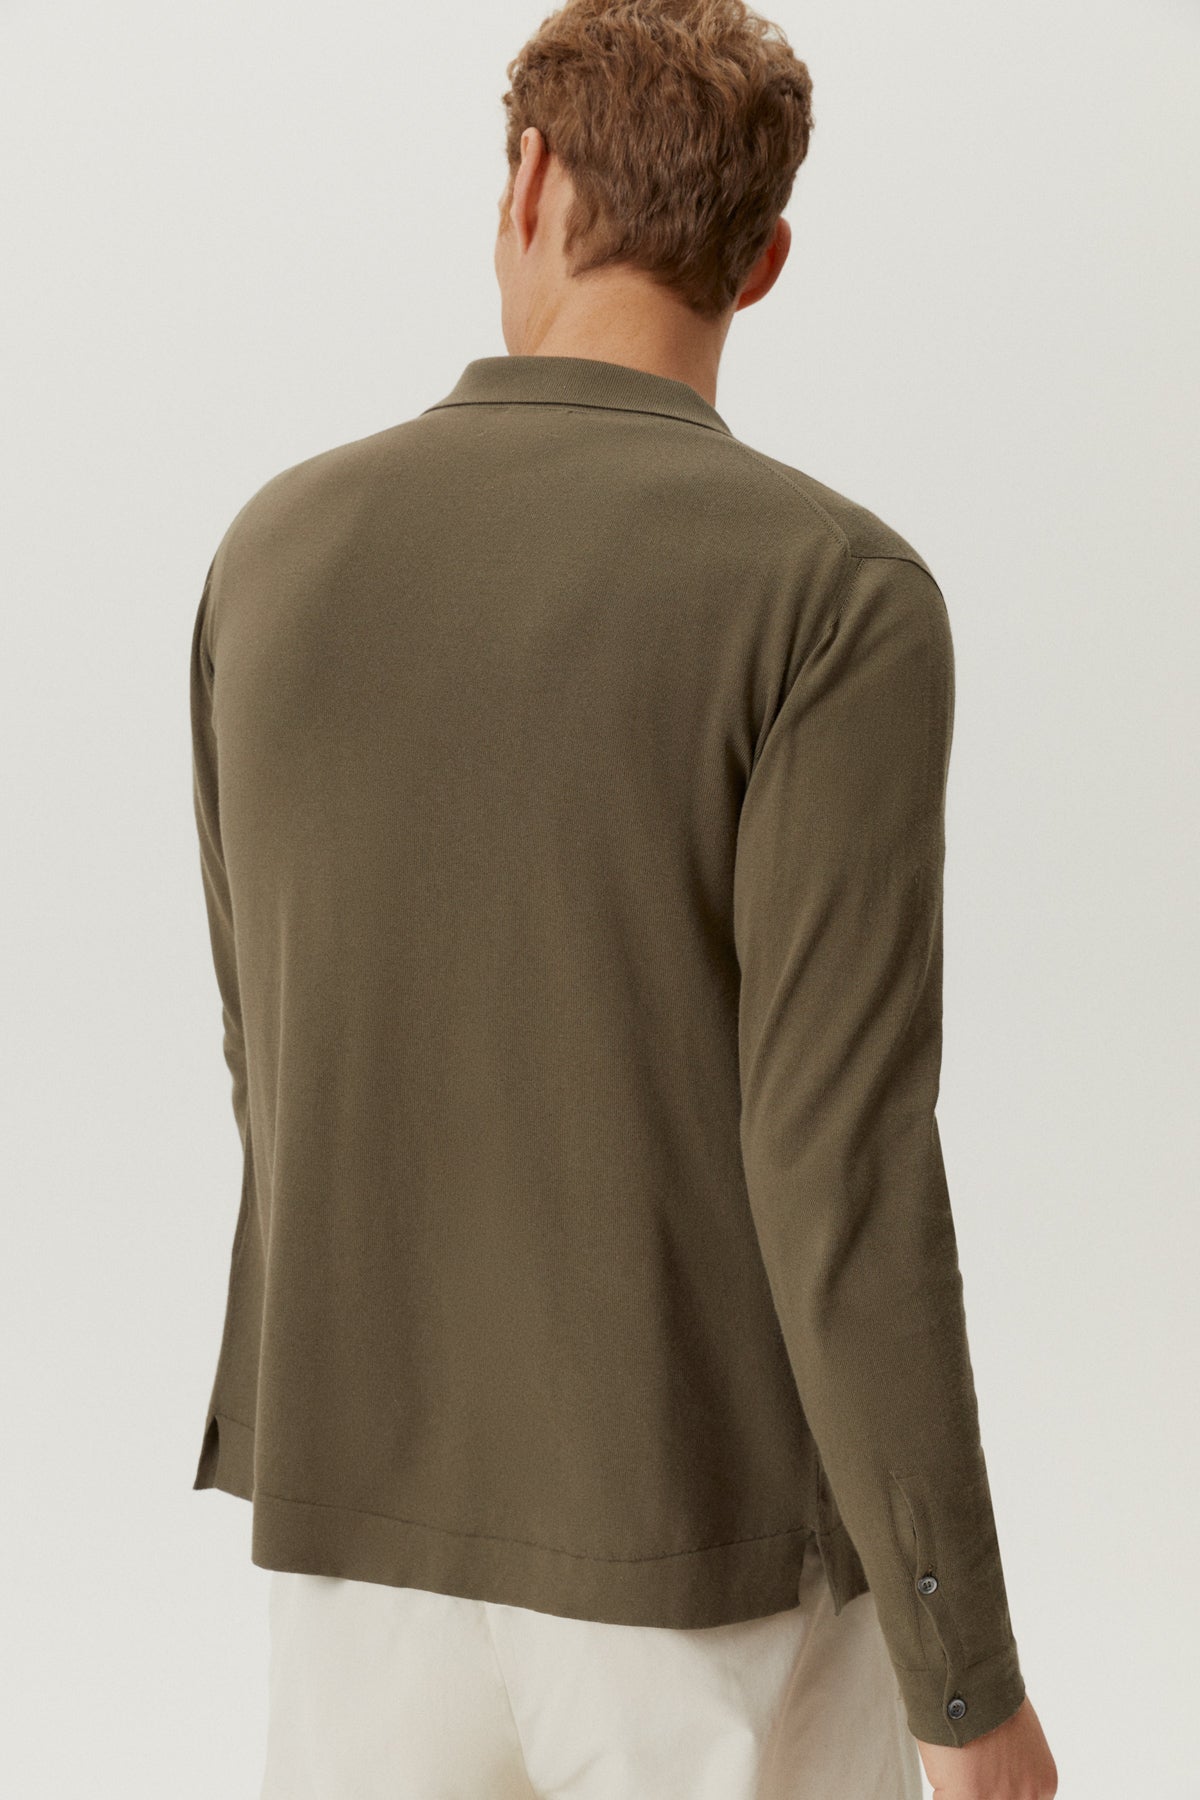 Kaki Green | The Organic Cotton Knit Shirt